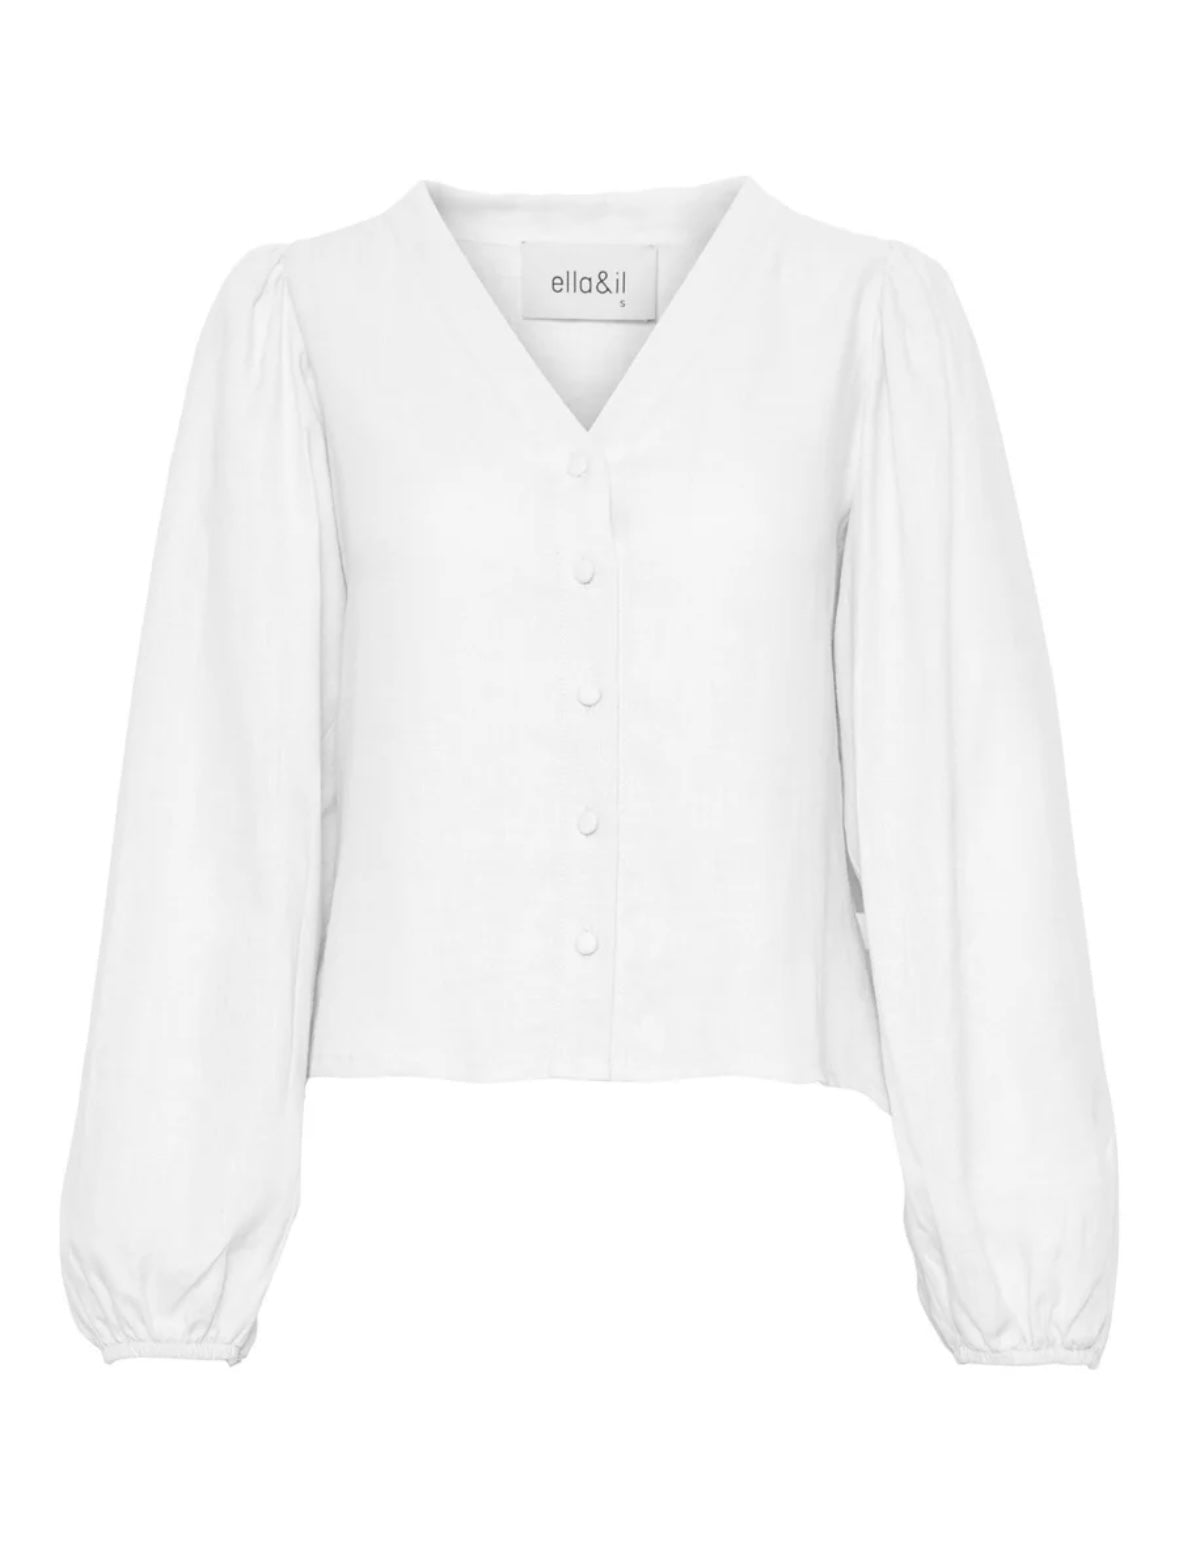 Ella&il Edith Linen shirt - White